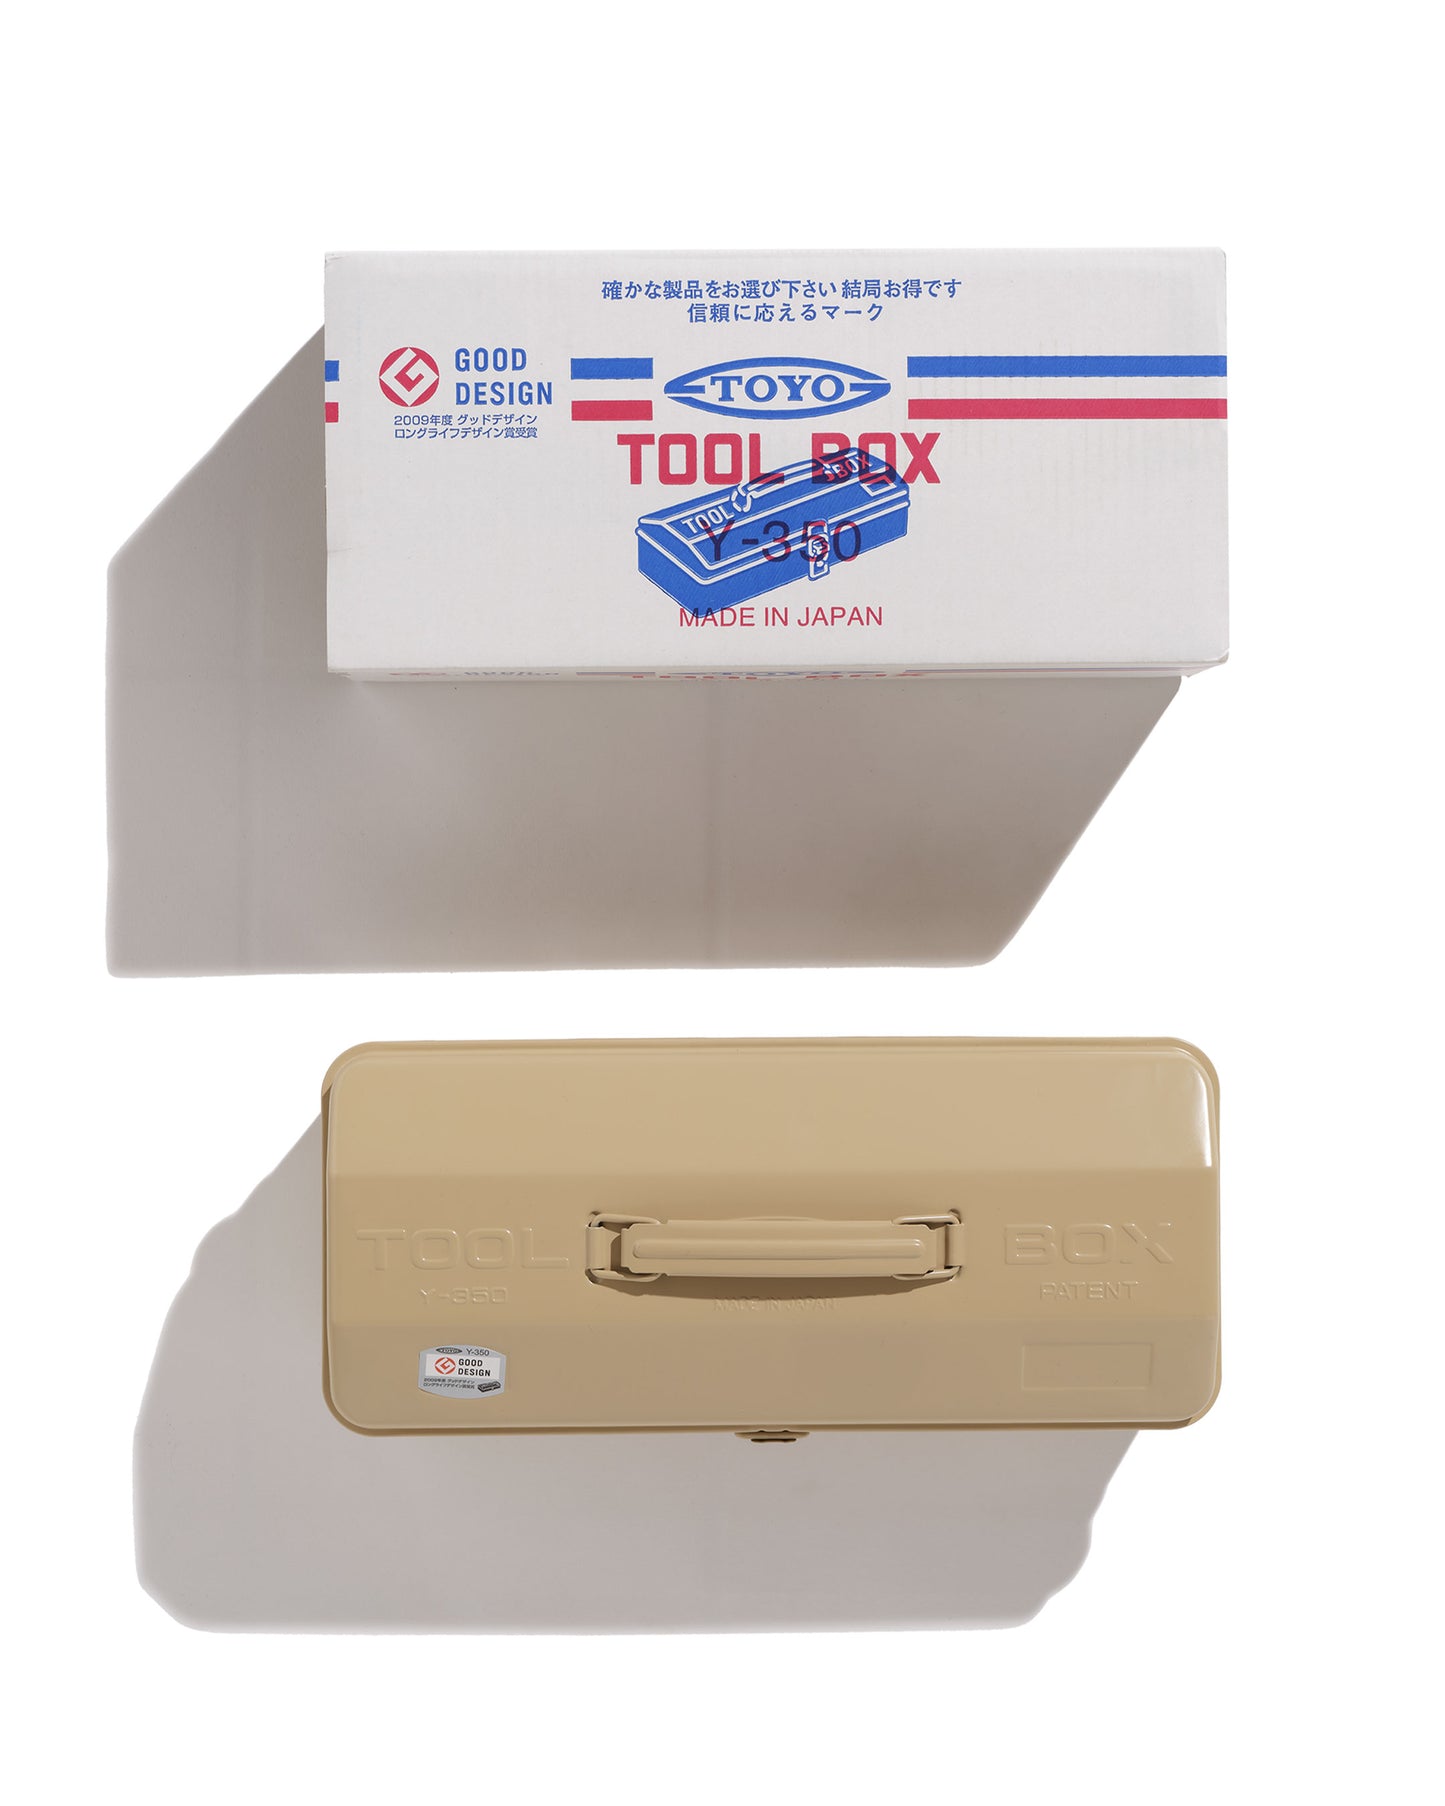 Toyo Steel Y-350 Tool Box